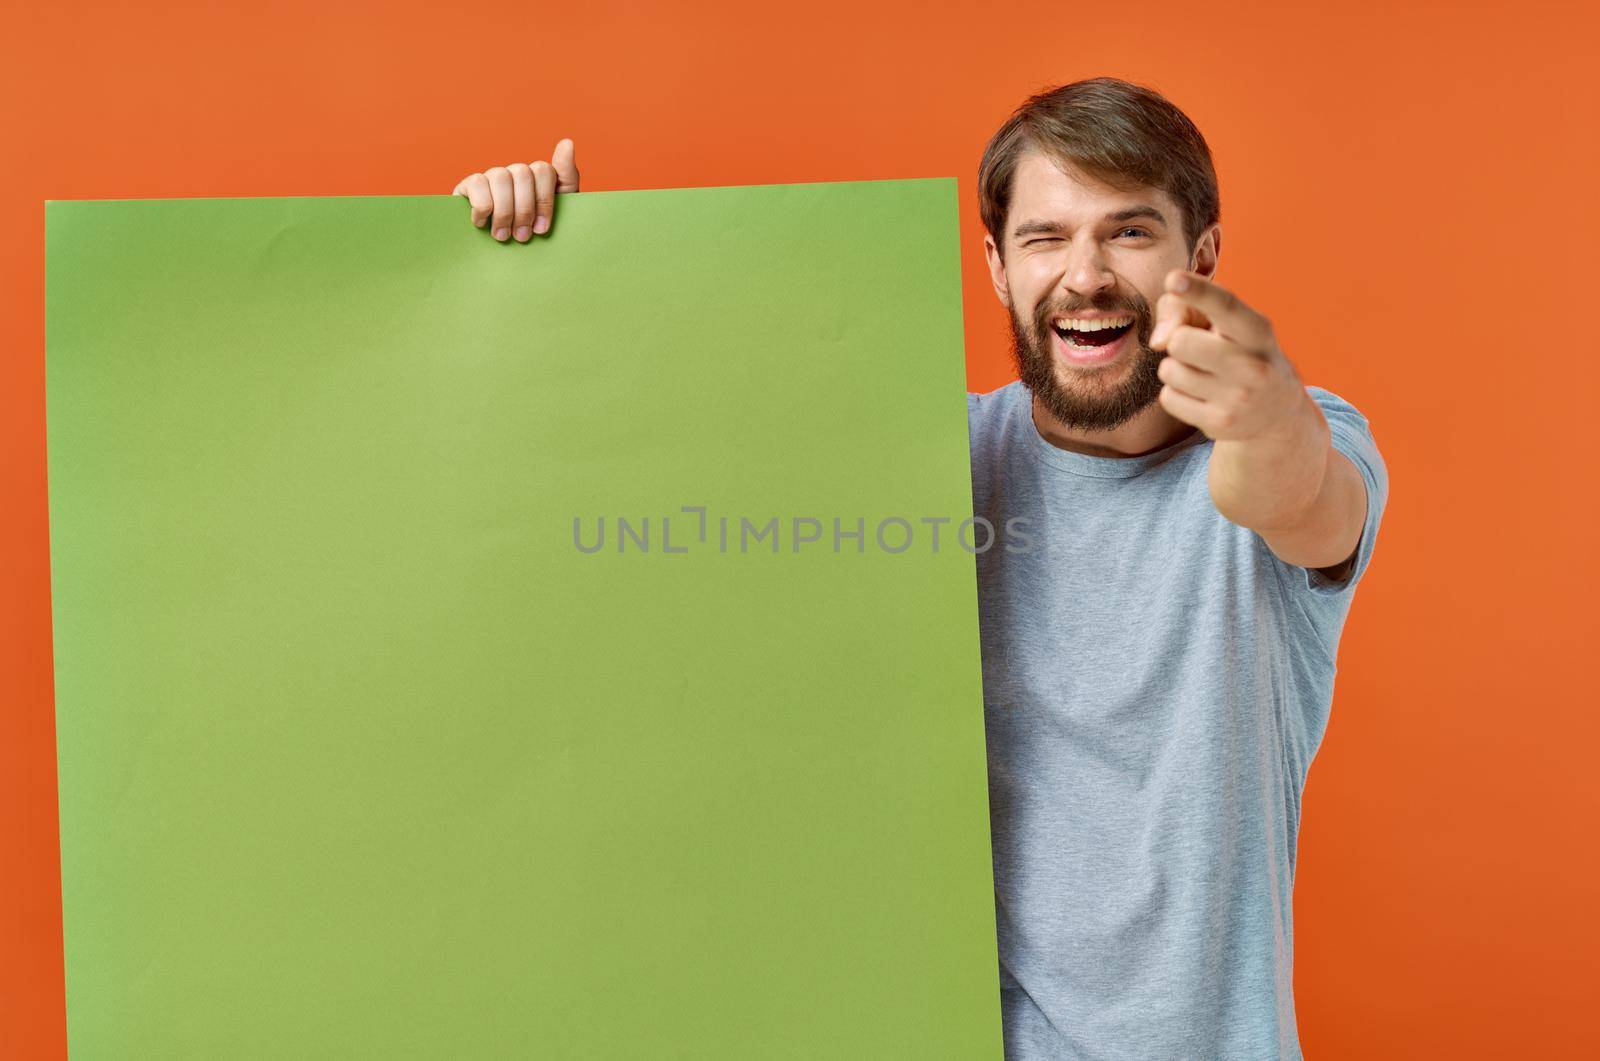 emotional man t shirts green mockup poster presentation marketing by SHOTPRIME